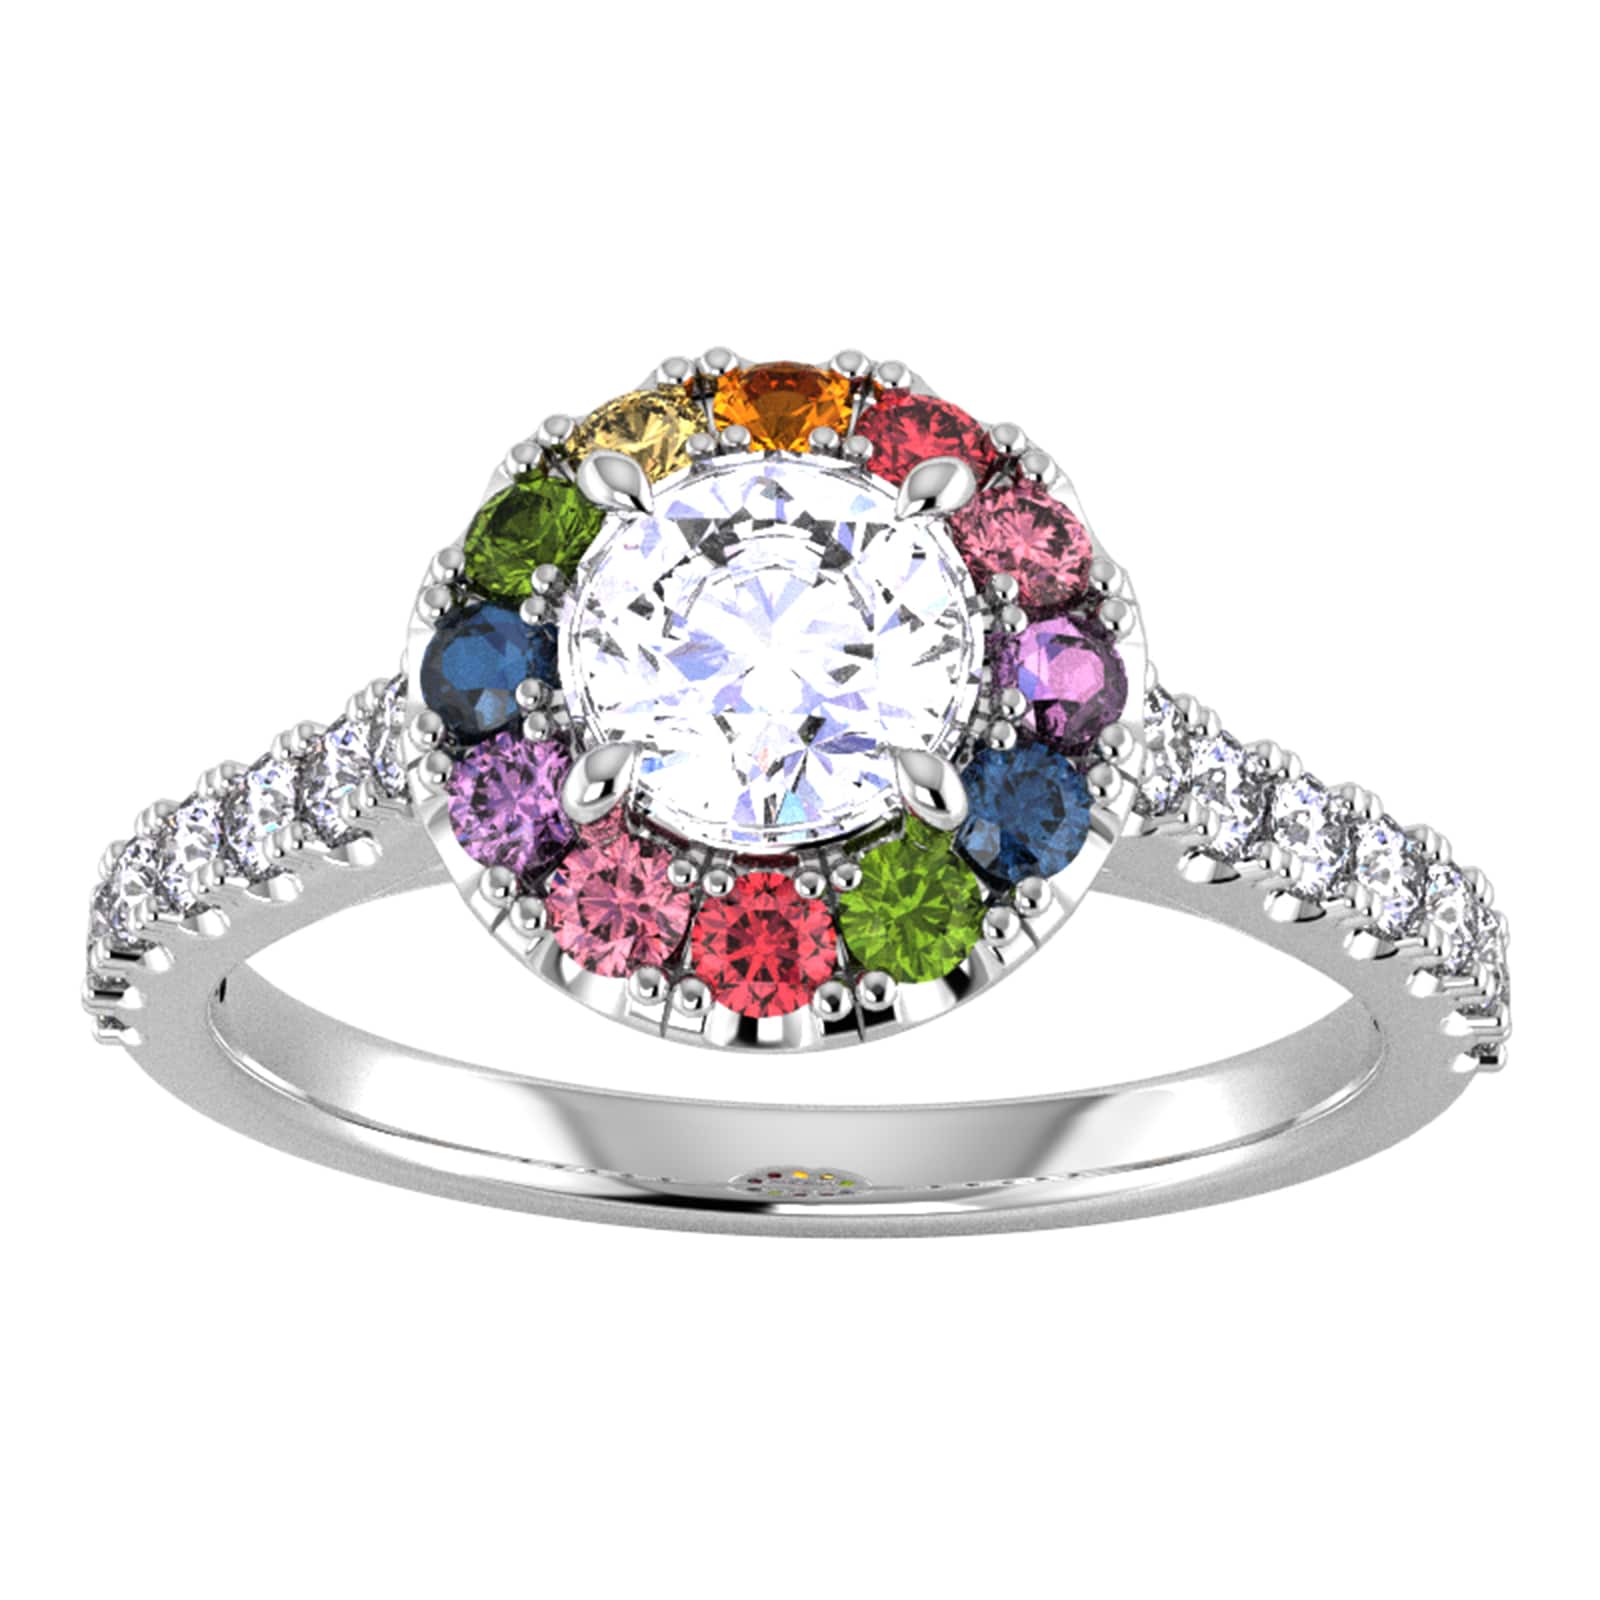 9ct White Gold Diamond & Rainbow Sapphire Halo Ring - Ring Size O.5